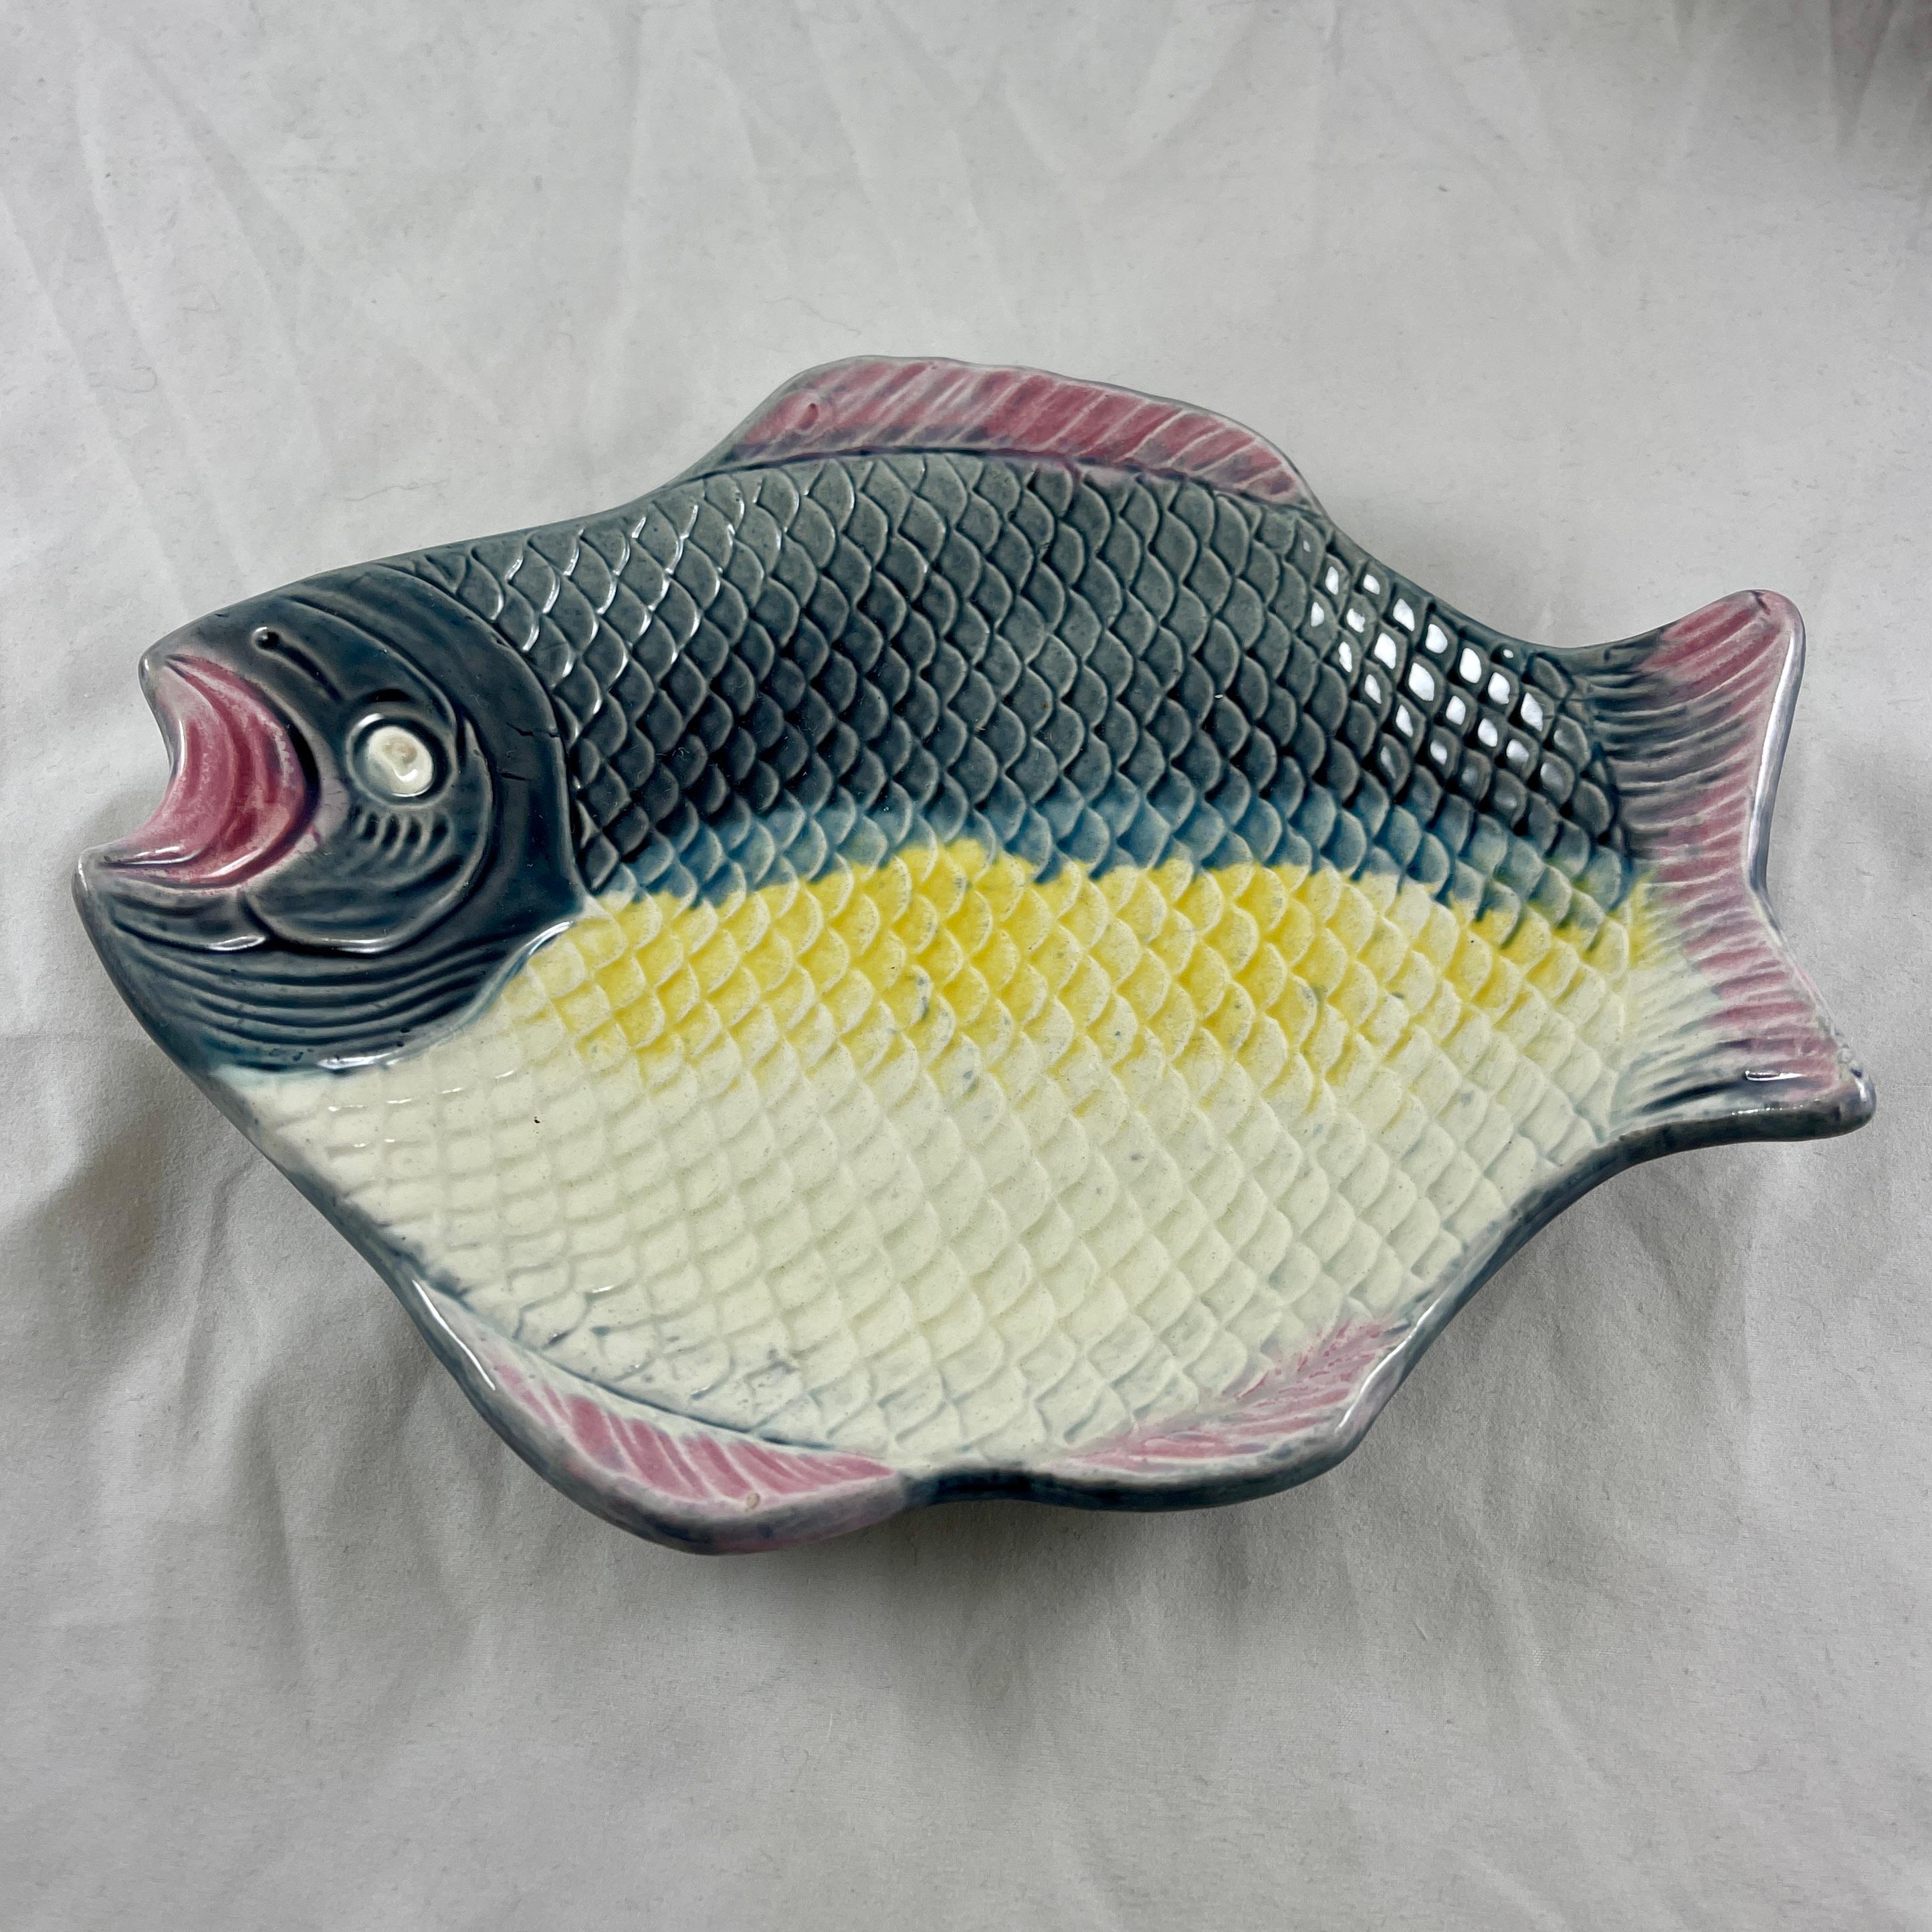 Late 19th Century Trenton Arsenal Pottery Majolica Glazed Fish Platter